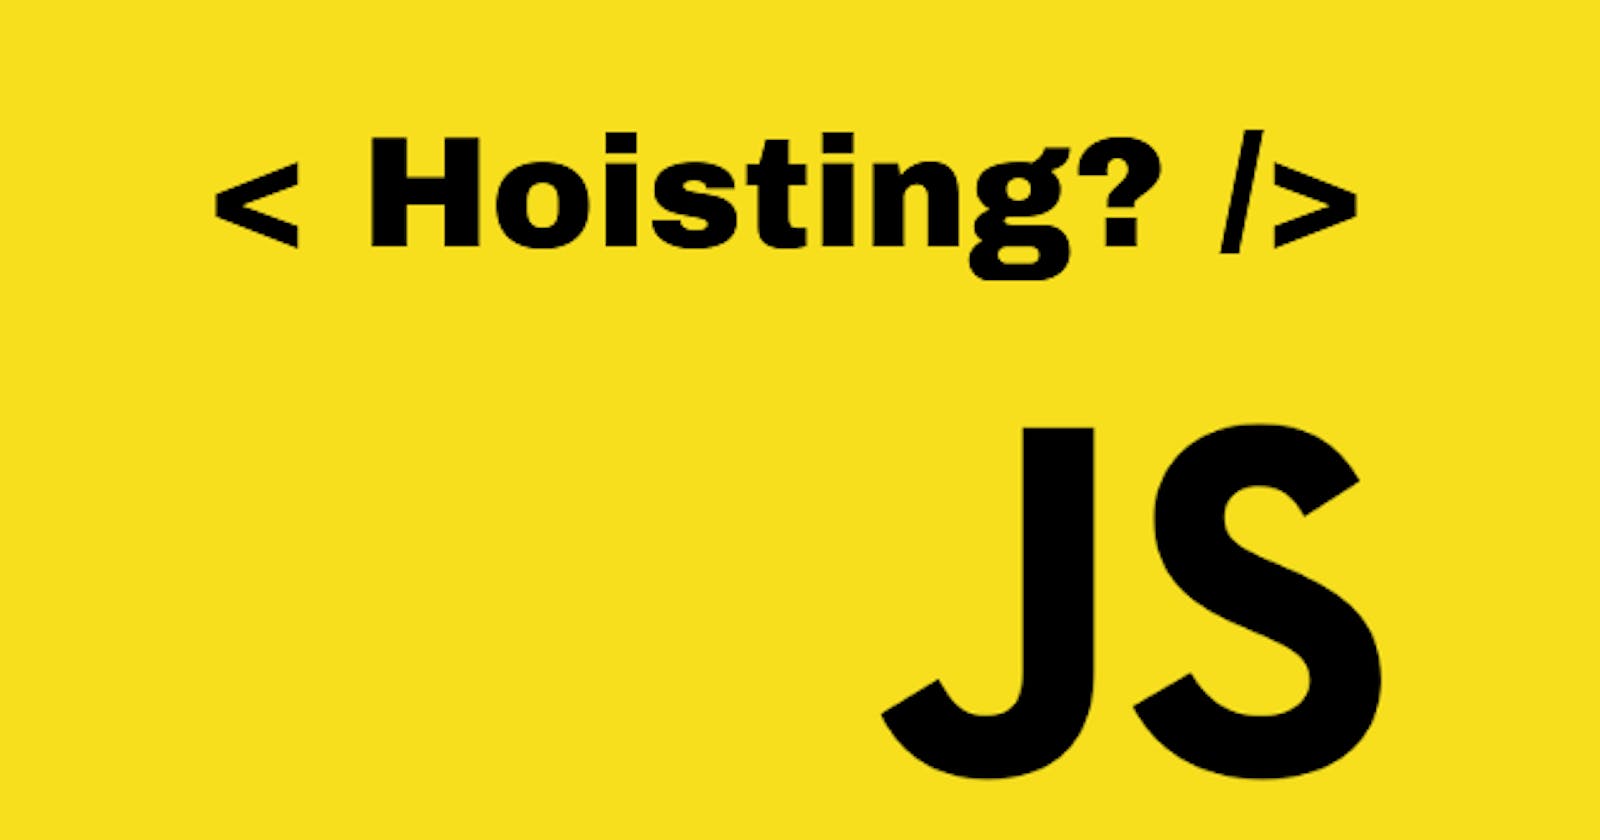 What is Hoisting In JavaScript?